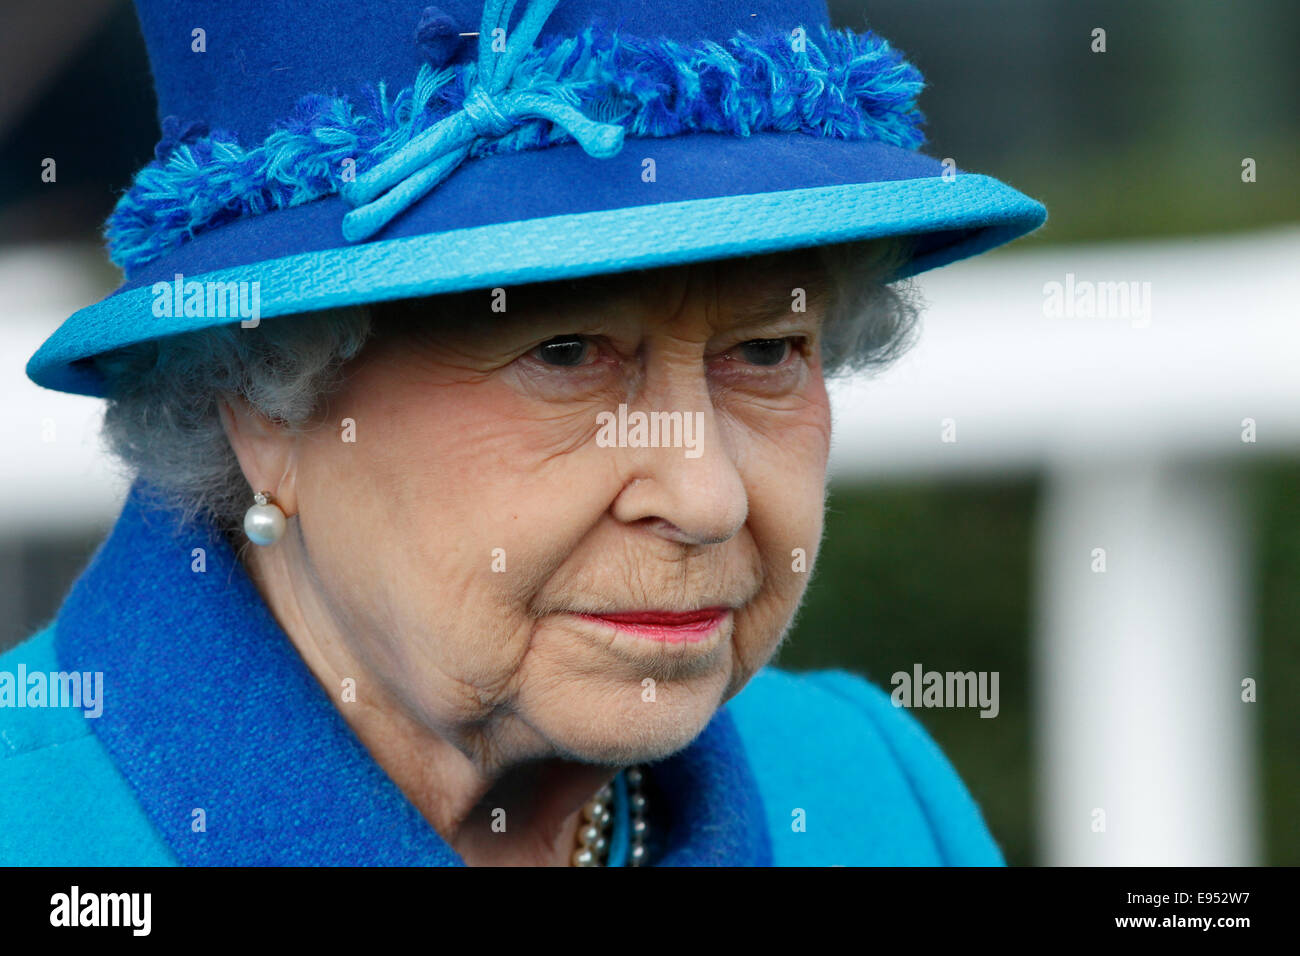 18.10.2014 - Ascot; Königin Elizabeth II. im Portrait. Bildnachweis: Lajos-Eric Balogh/turfstock.com Stockfoto